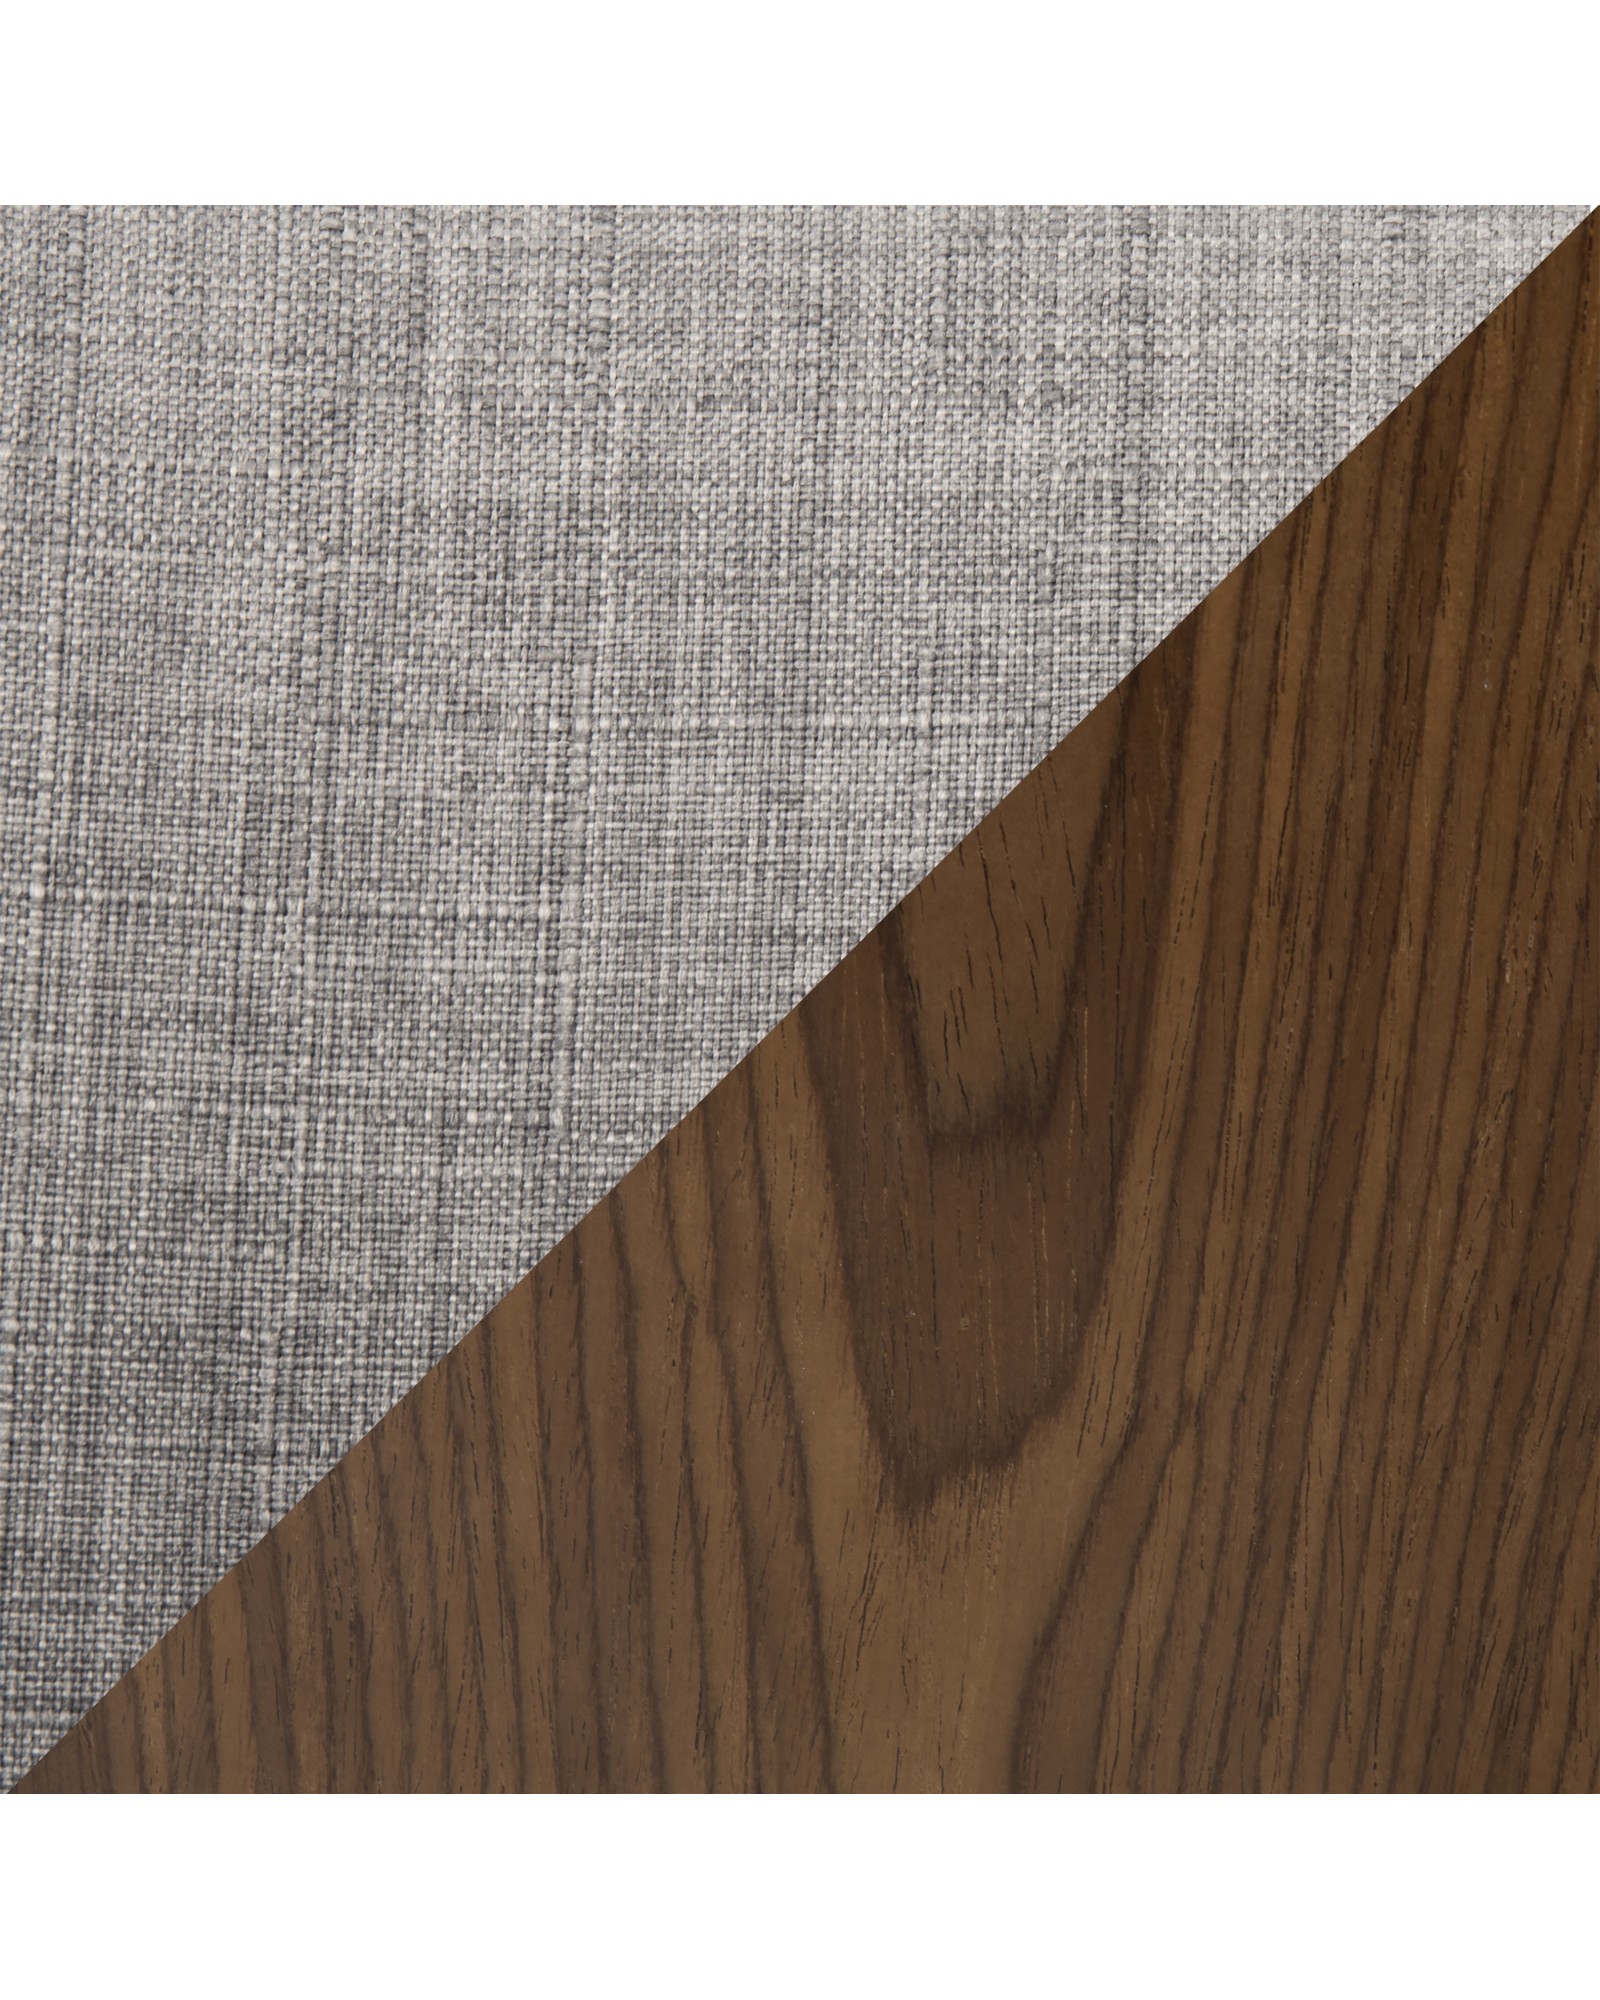 Curvini Mid-Century Modern Counter Stool in Walnut Wood and Light Grey Fabric